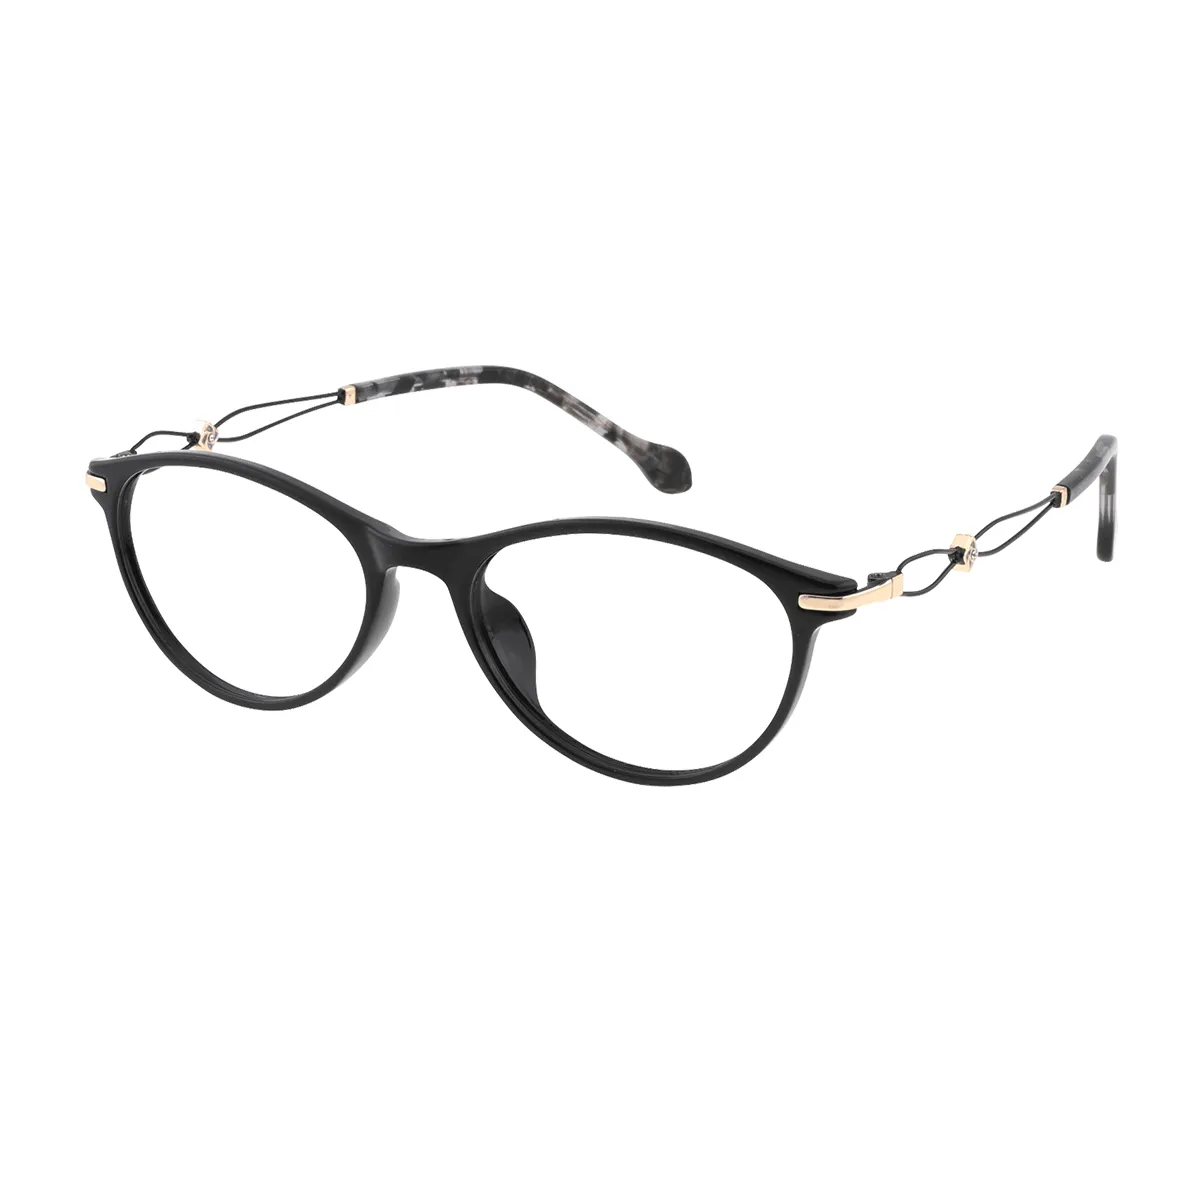 Fashion Oval Black Reading Glasses for Women